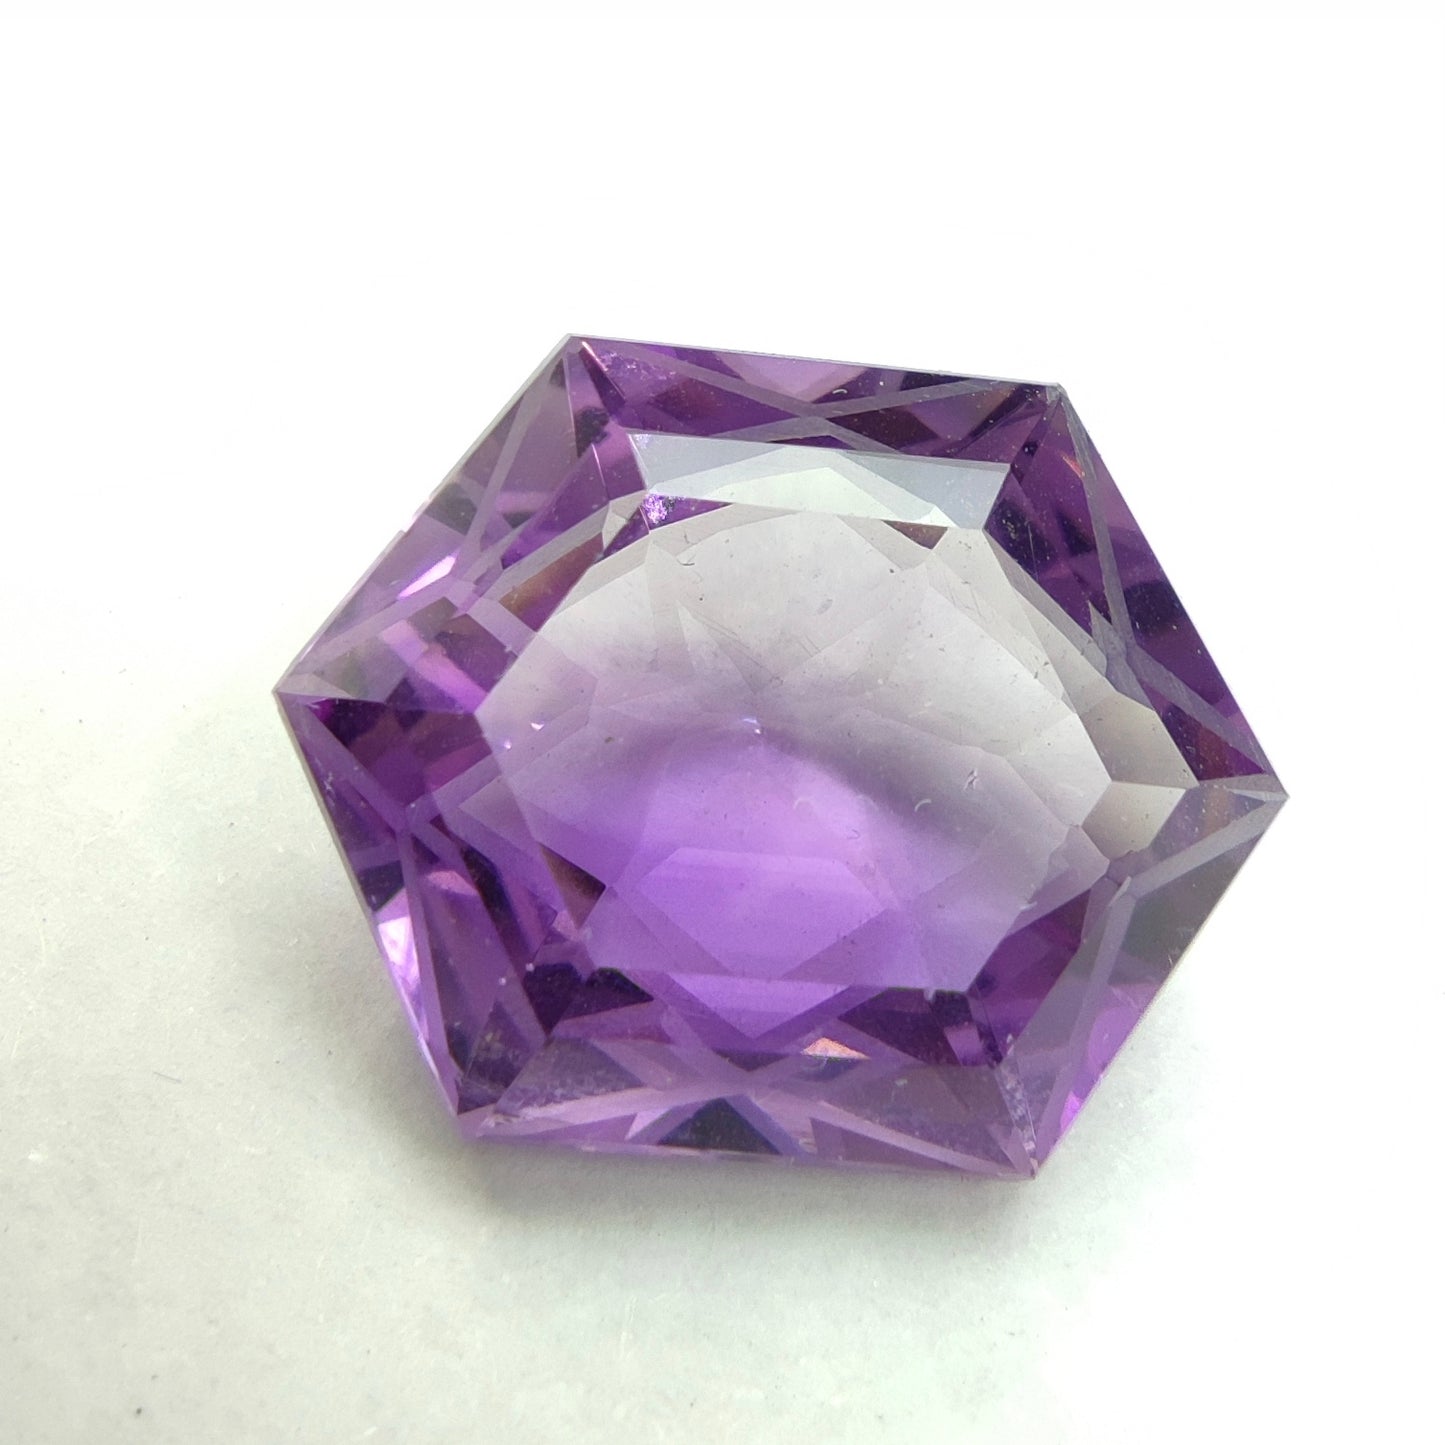 ARSAA GEMS AND MINERALSNatural purple fancy cut hexagonal shape faceted amethyst gem, 11.5ct - Premium Amethyst Cut Stone from ARSAA GEMS AND MINERALS - Just $35! Shop now at ARSAA GEMS AND MINERALS